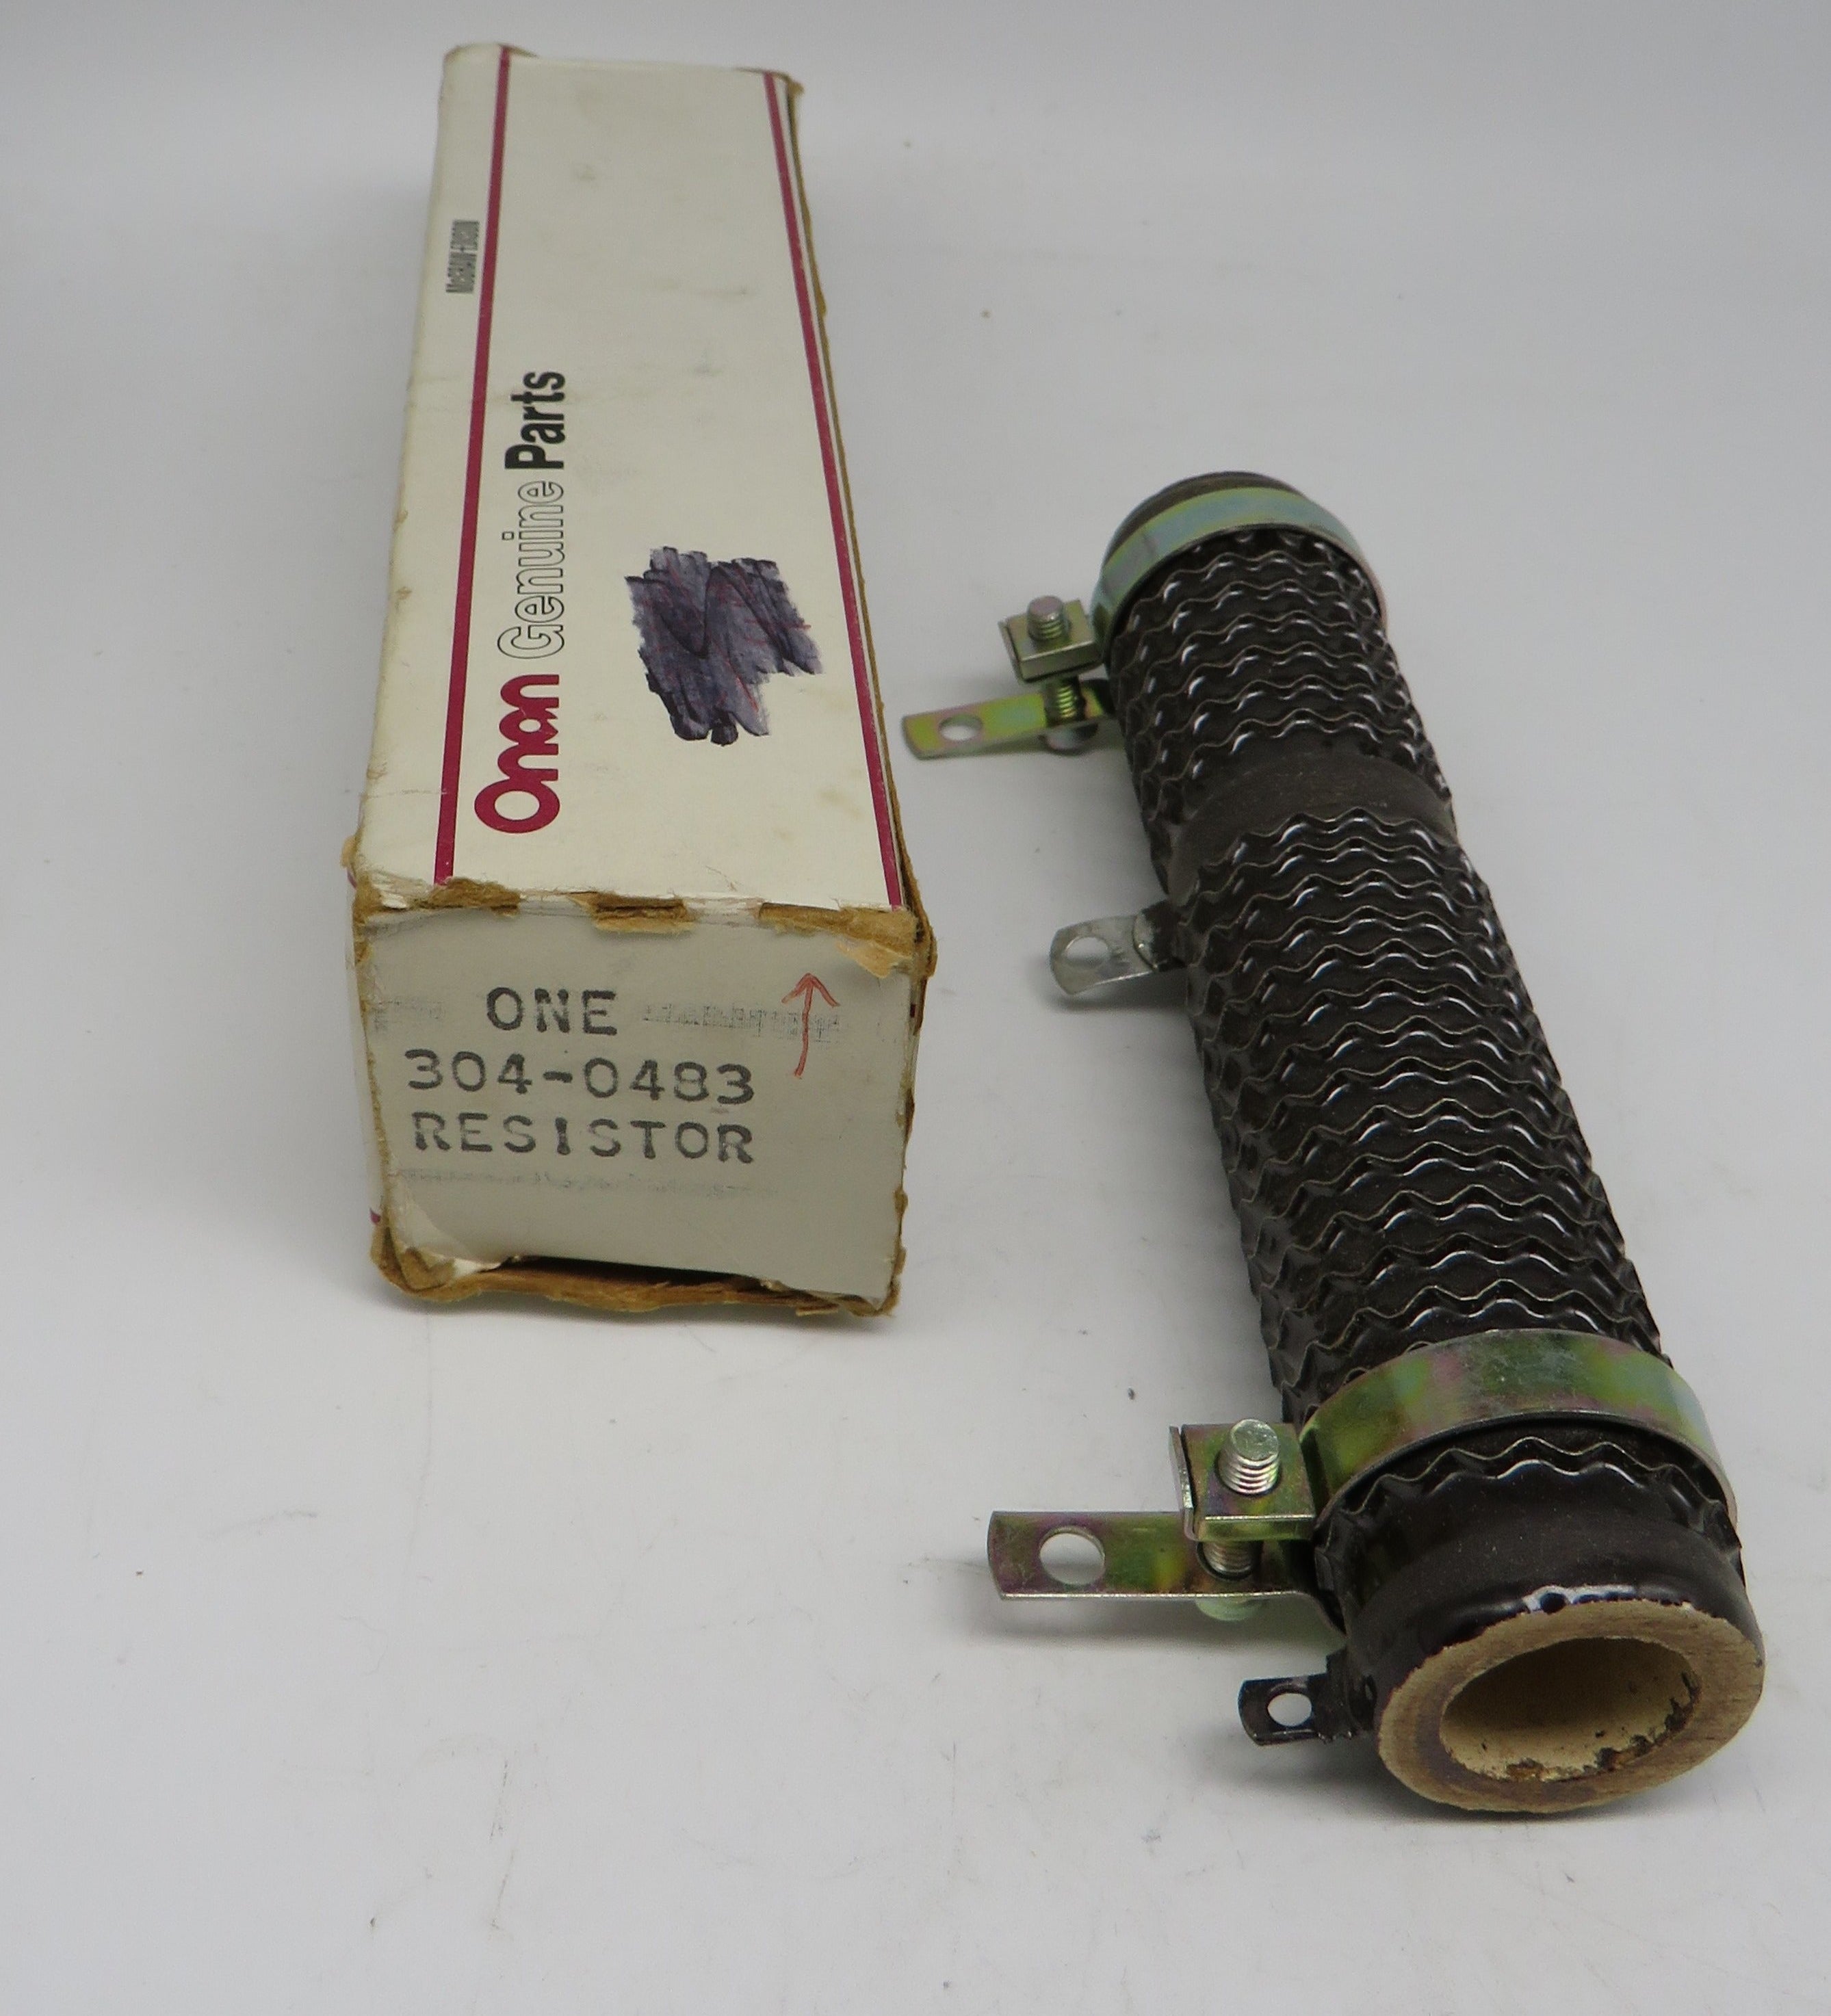 304-0483 Onan Resistor Tapped 9 OHM 